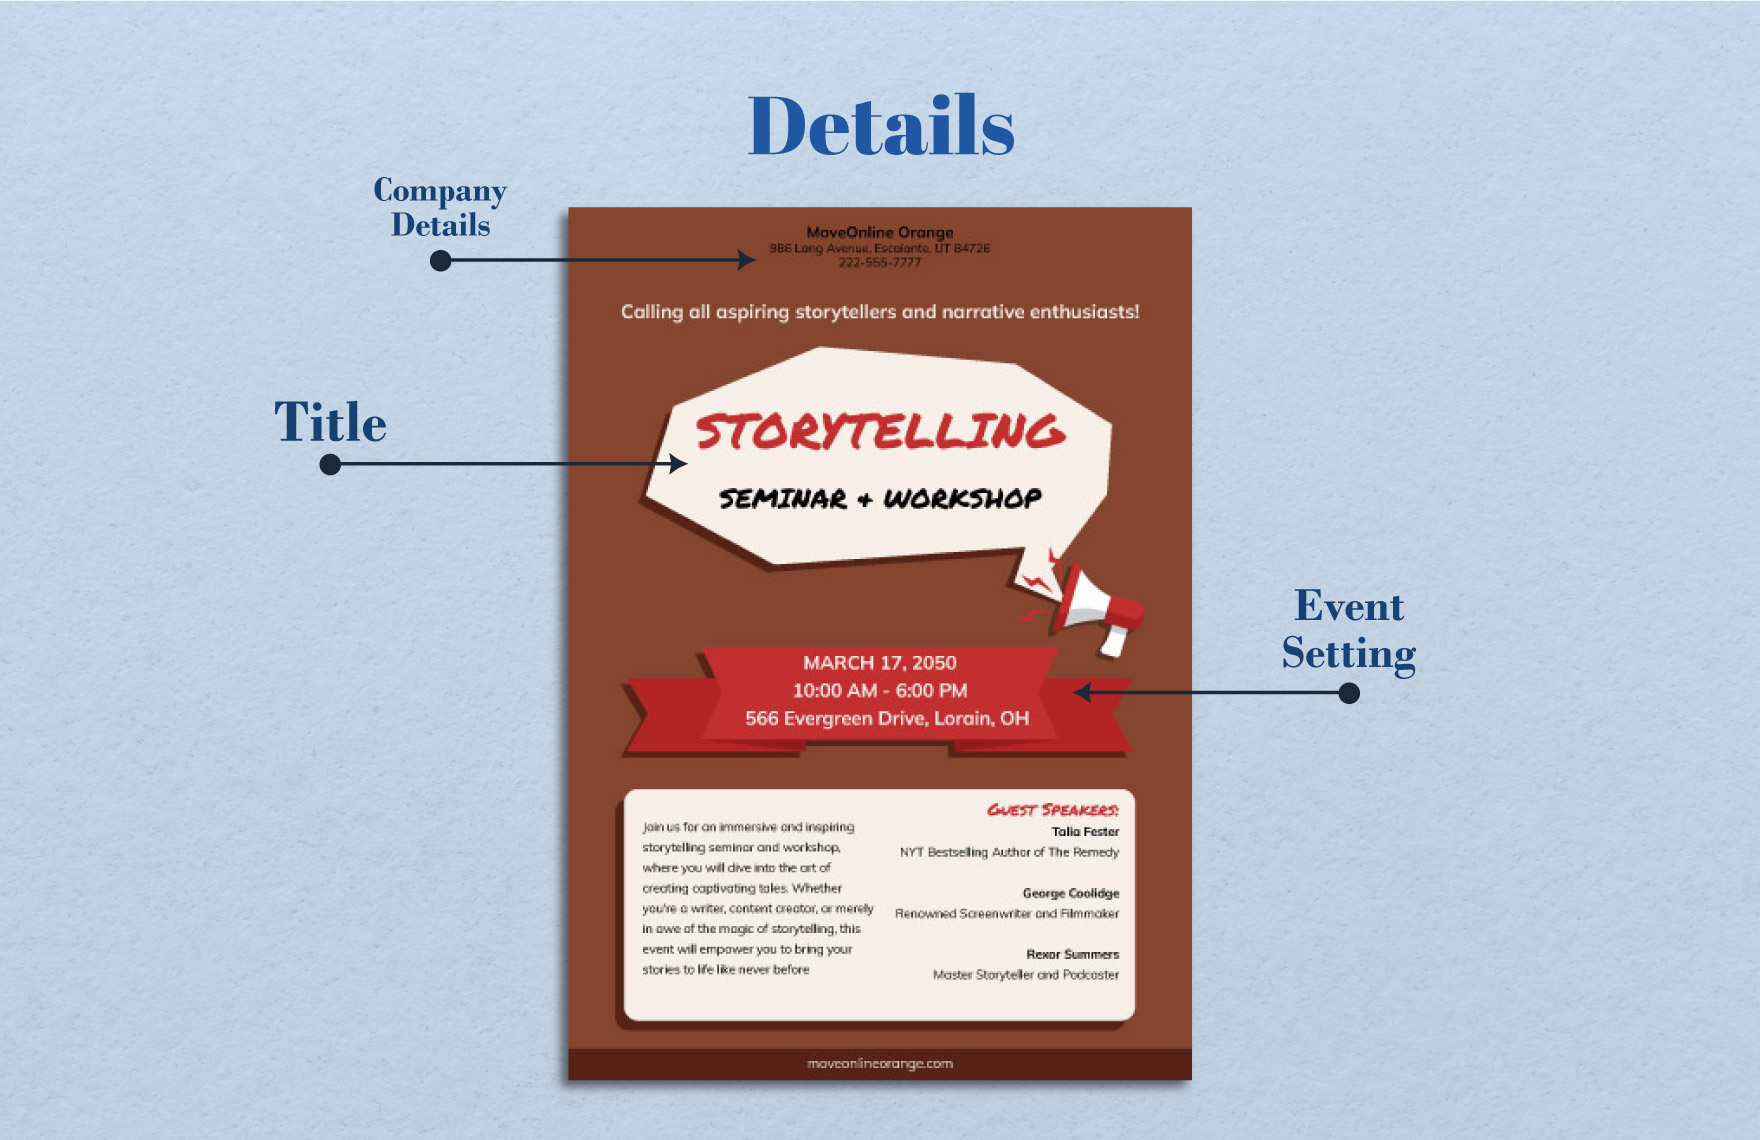 Move Online Orange Storytelling Seminar Workshop